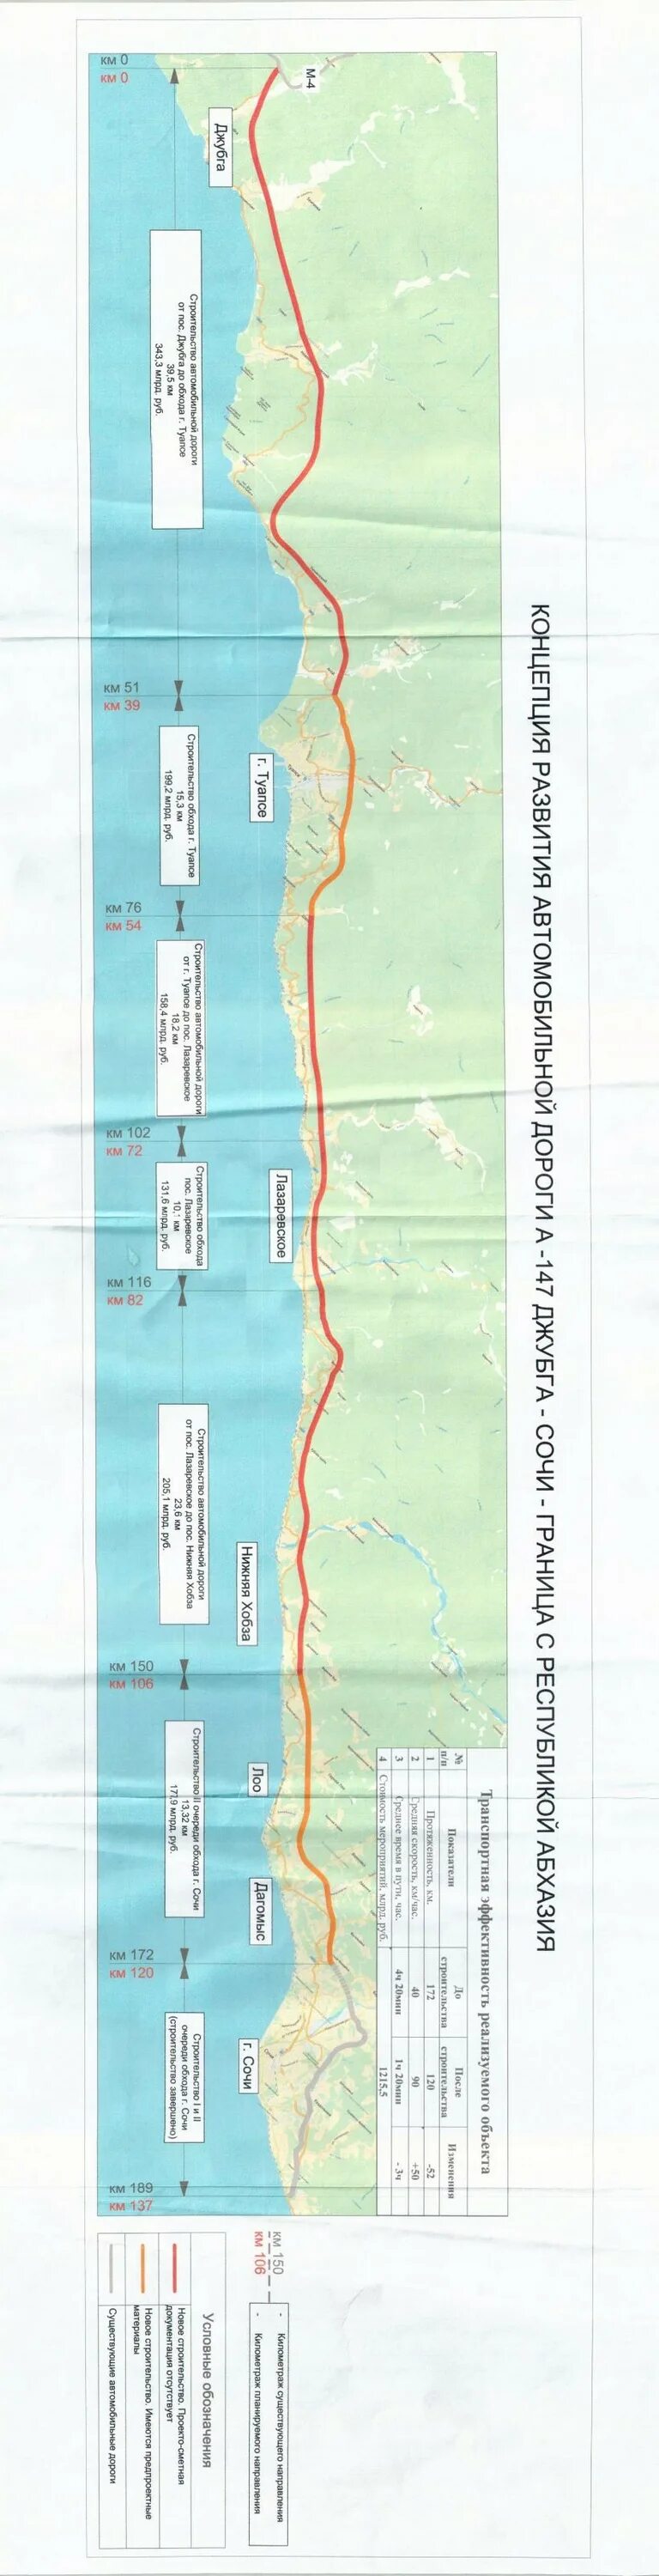 Новая трасса джубга сочи проект на карте. А-147 Джубга-Сочи. План трассы Джубга Сочи. Дорога Джубга Сочи на карте проект. Строительство новой трассы Джубга Сочи на карте.